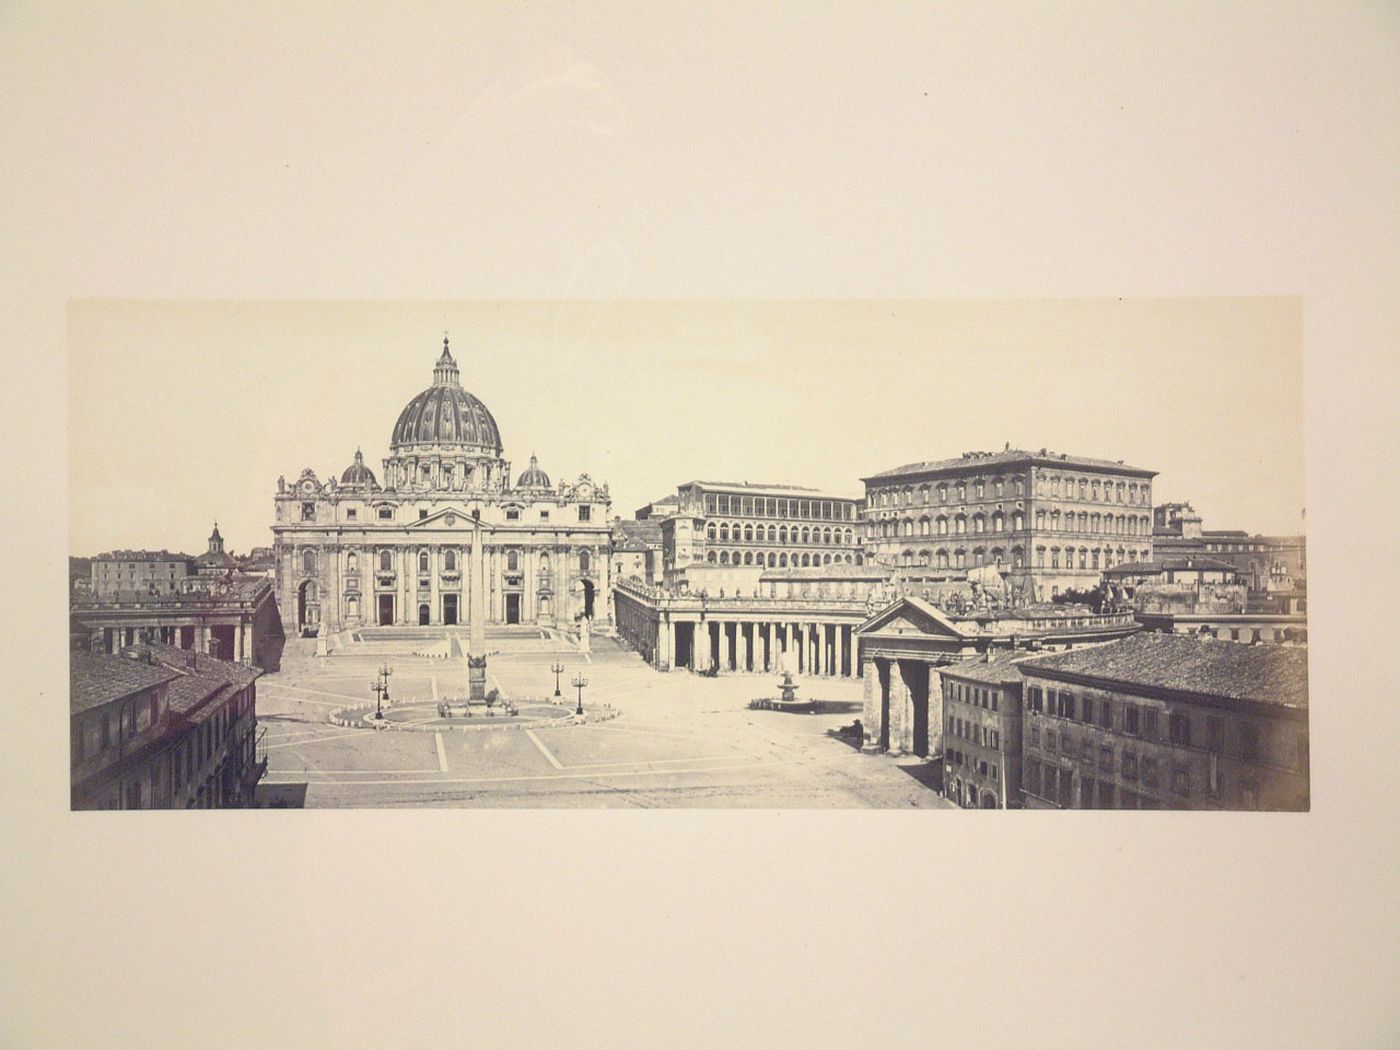 View of the Piazza San Pietro and the Basilica di San Pietro, Vatican City